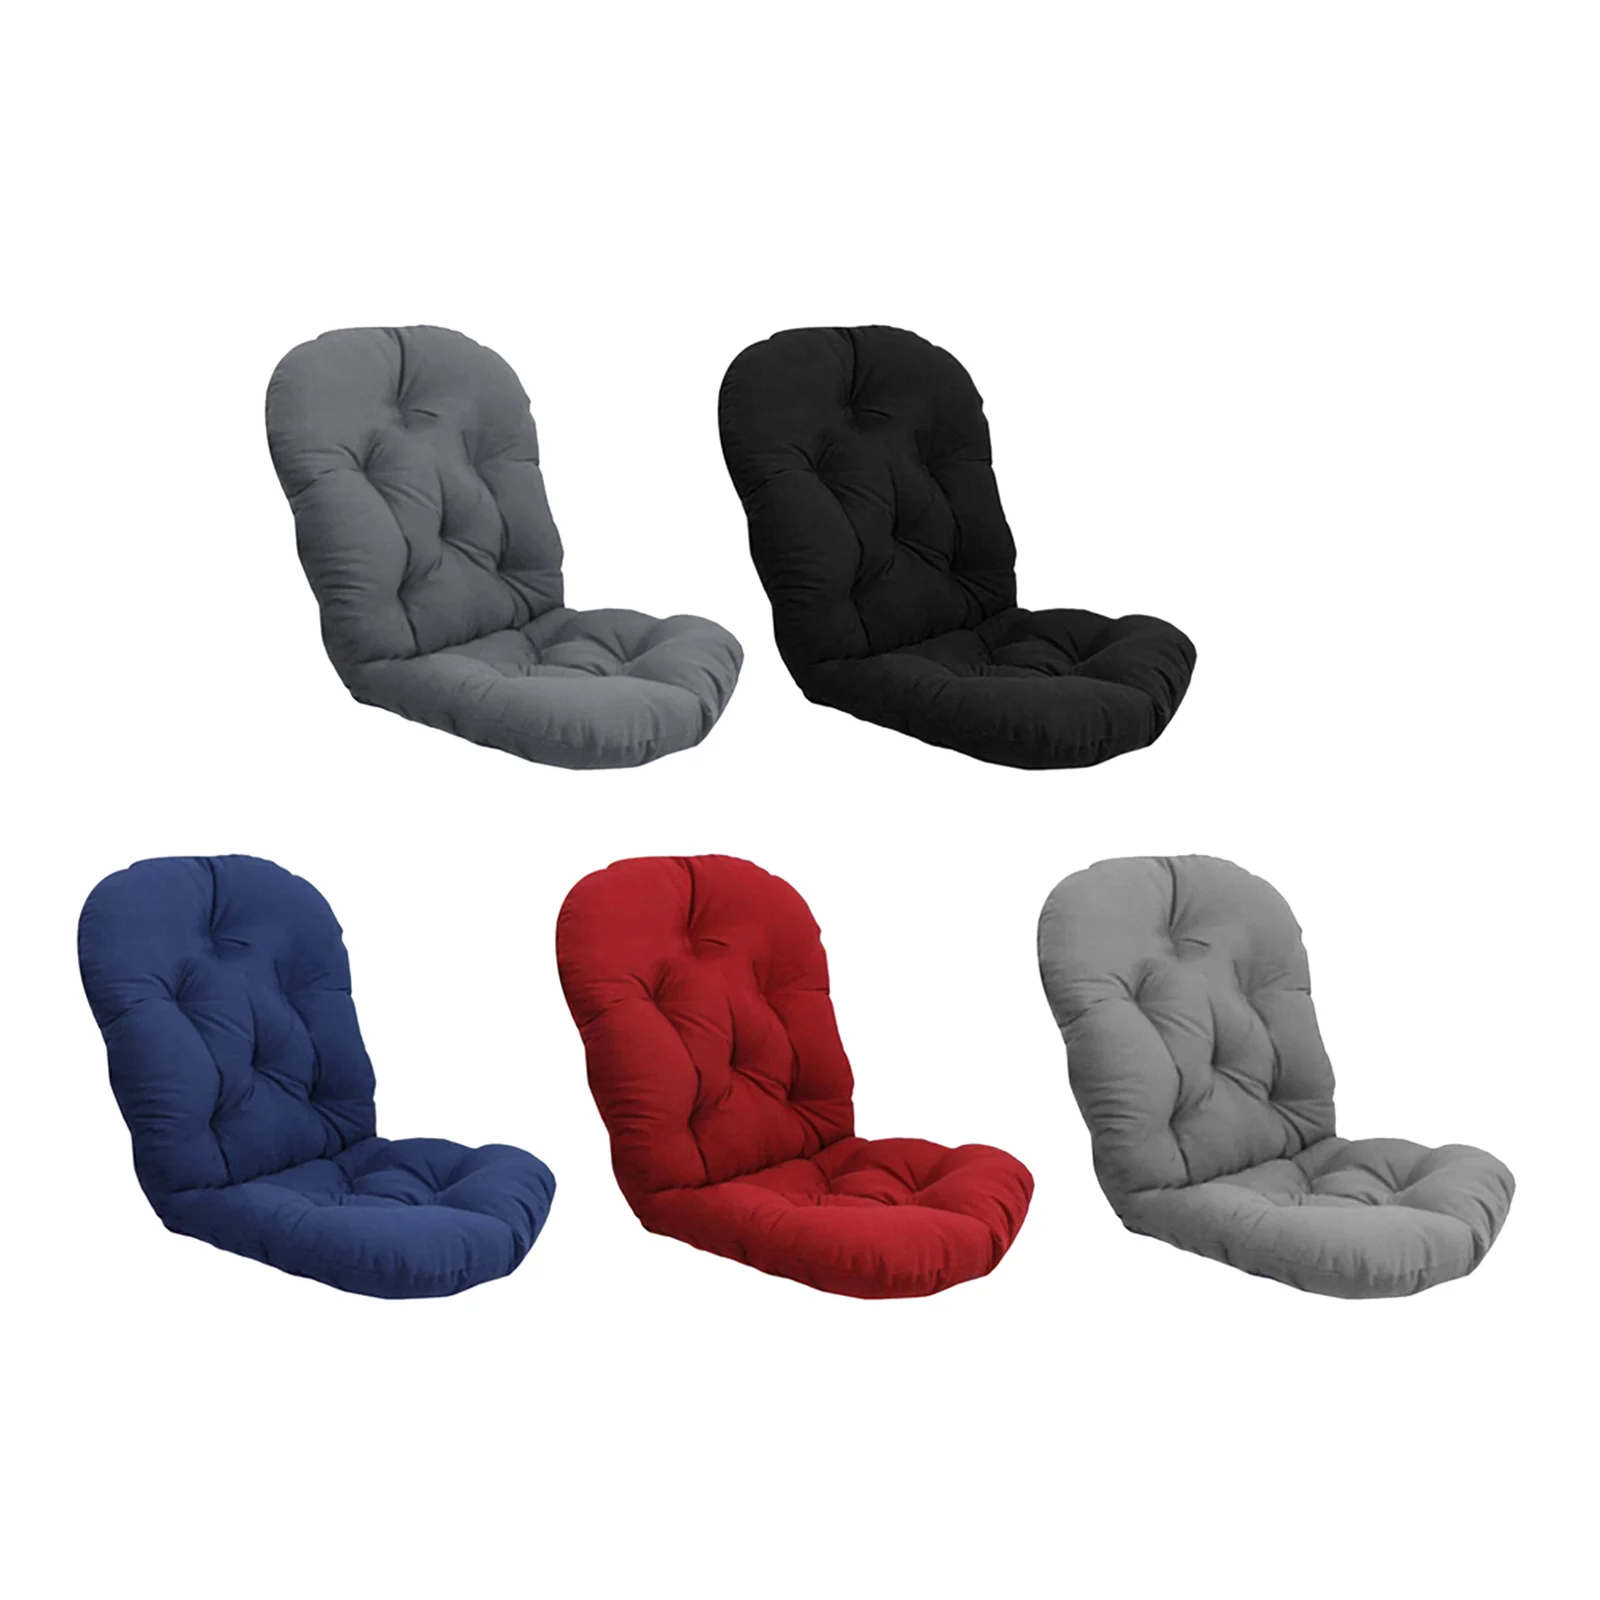 Textured Rattan Swivel Rocking Chair Cushion, 48